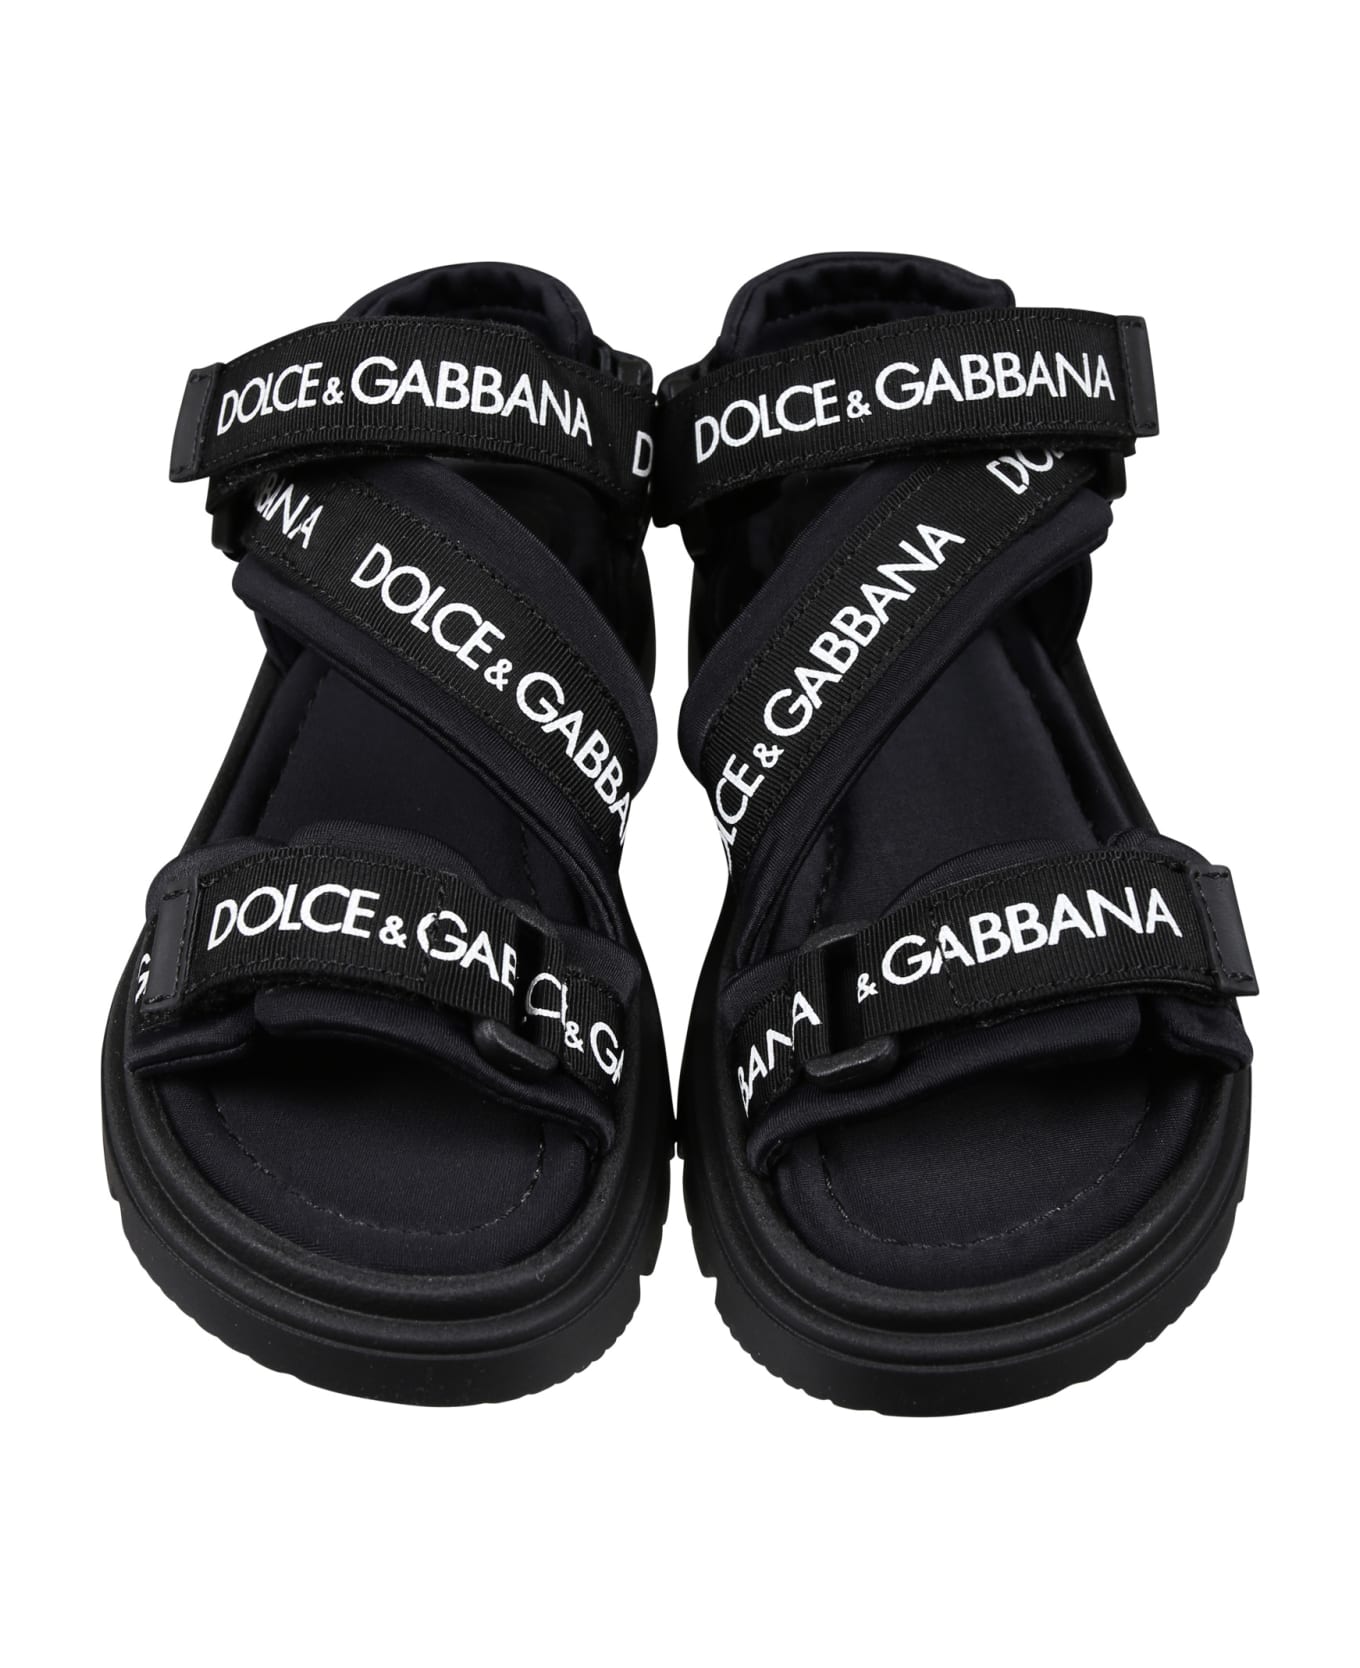 Dolce & Gabbana Black Sandals For Kids With Logo - Black